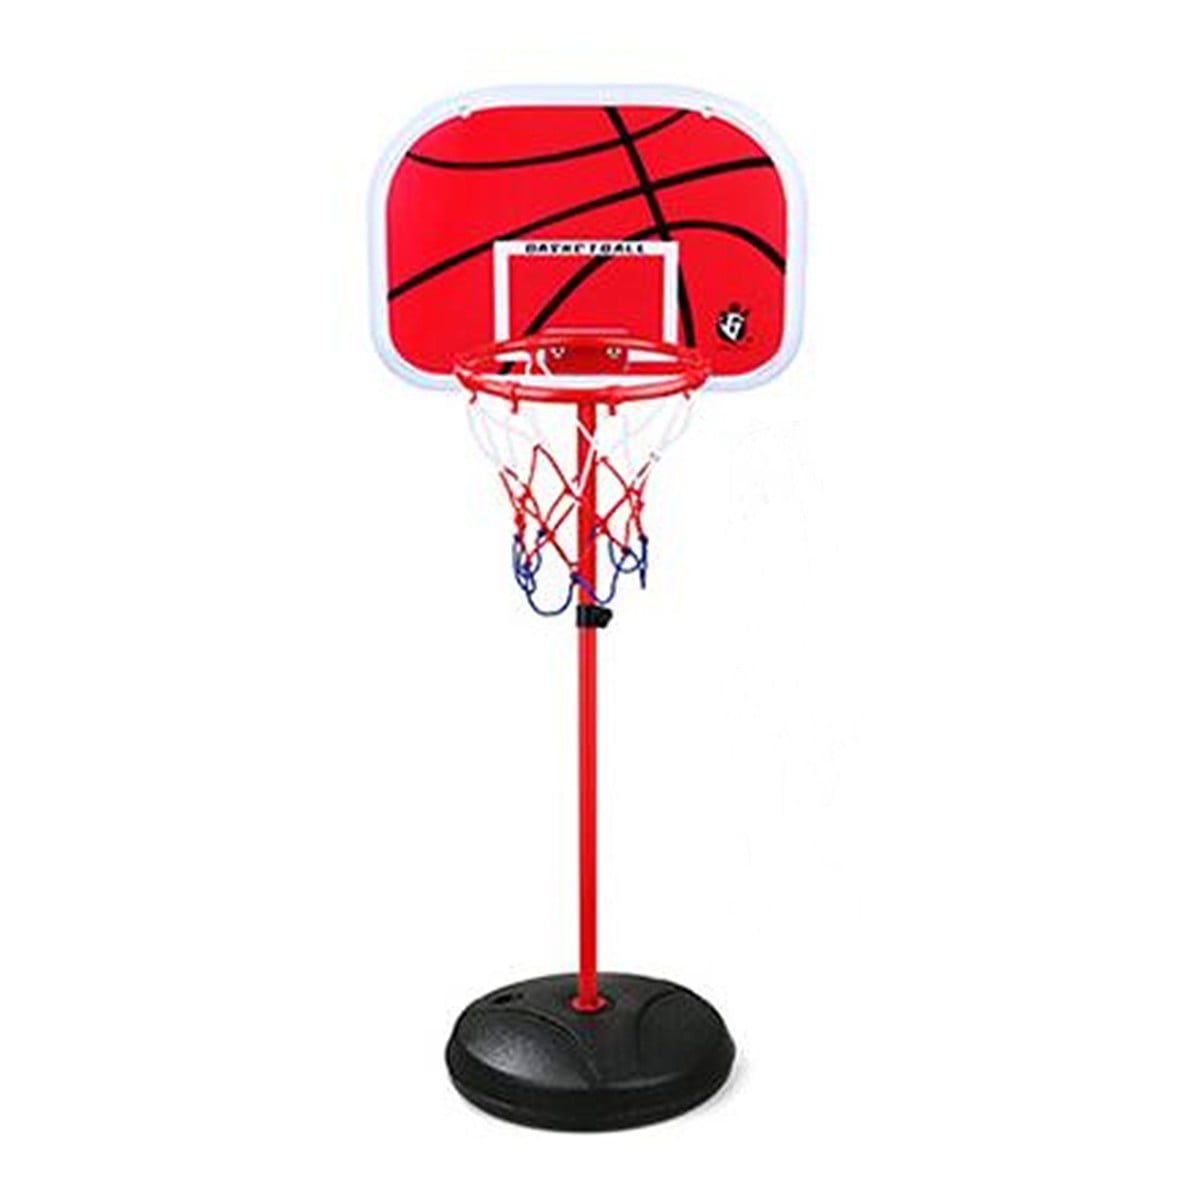 NEW Basketball Hoop Stand System Ring Backboard Net Height Adjustable Kids Gift 